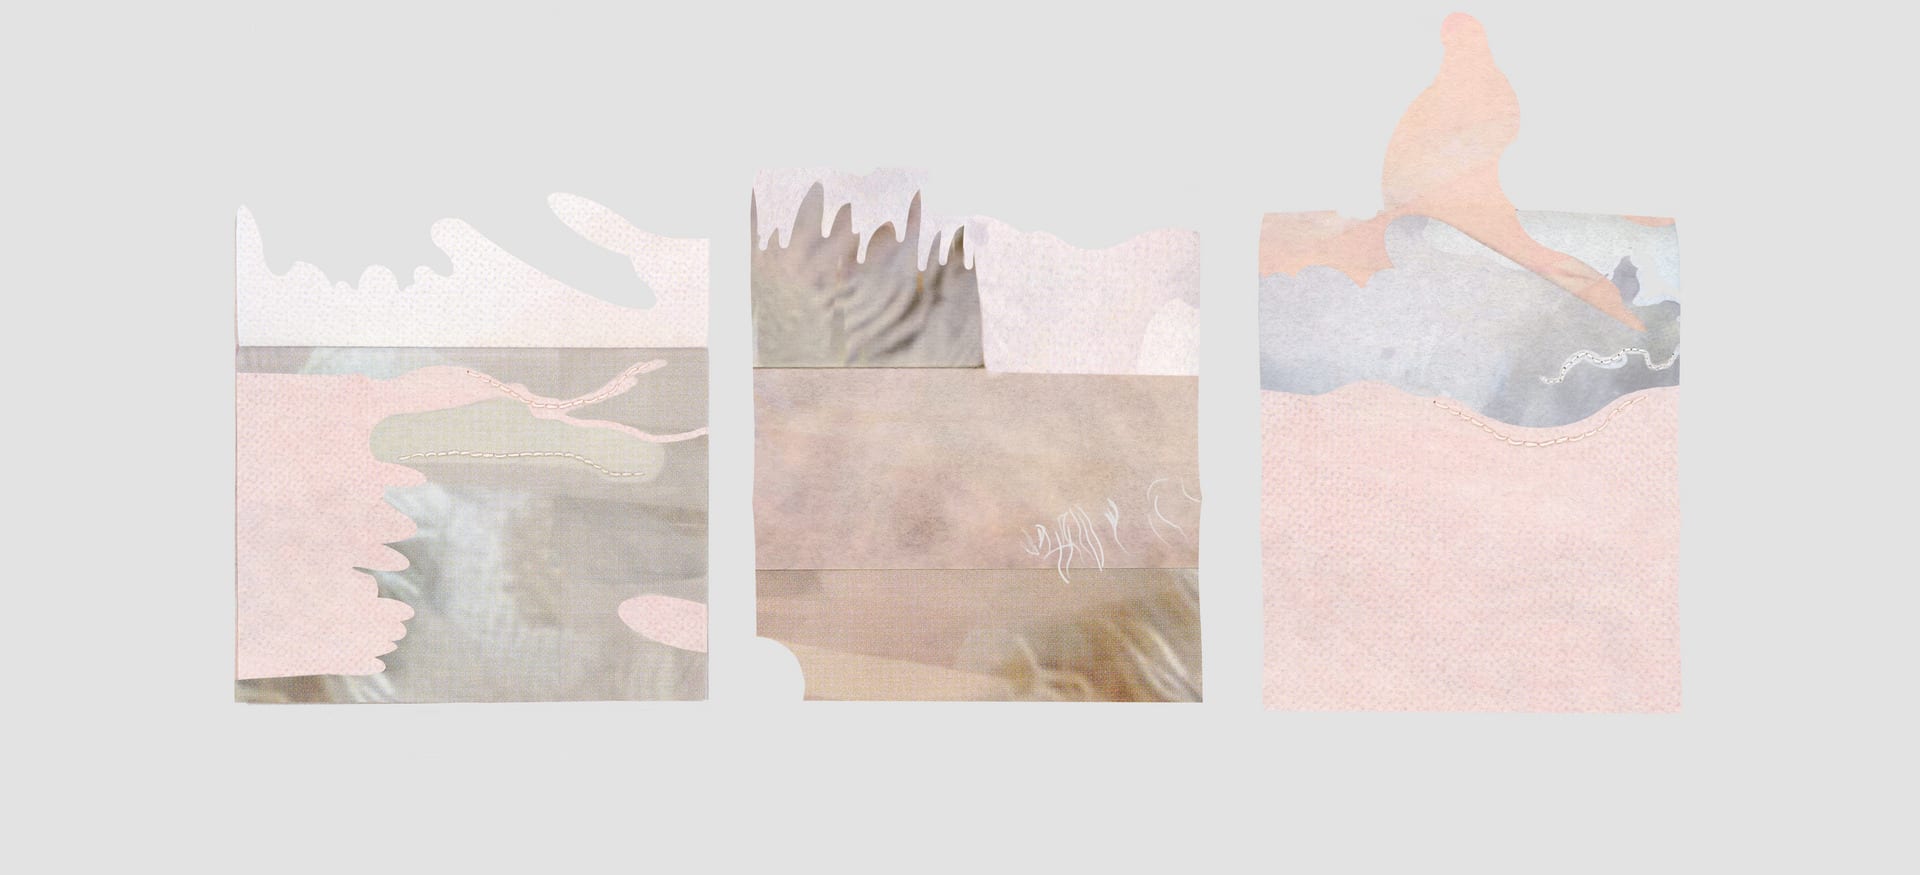 A digital collage of orregular shapes of pink, light brown and blue.